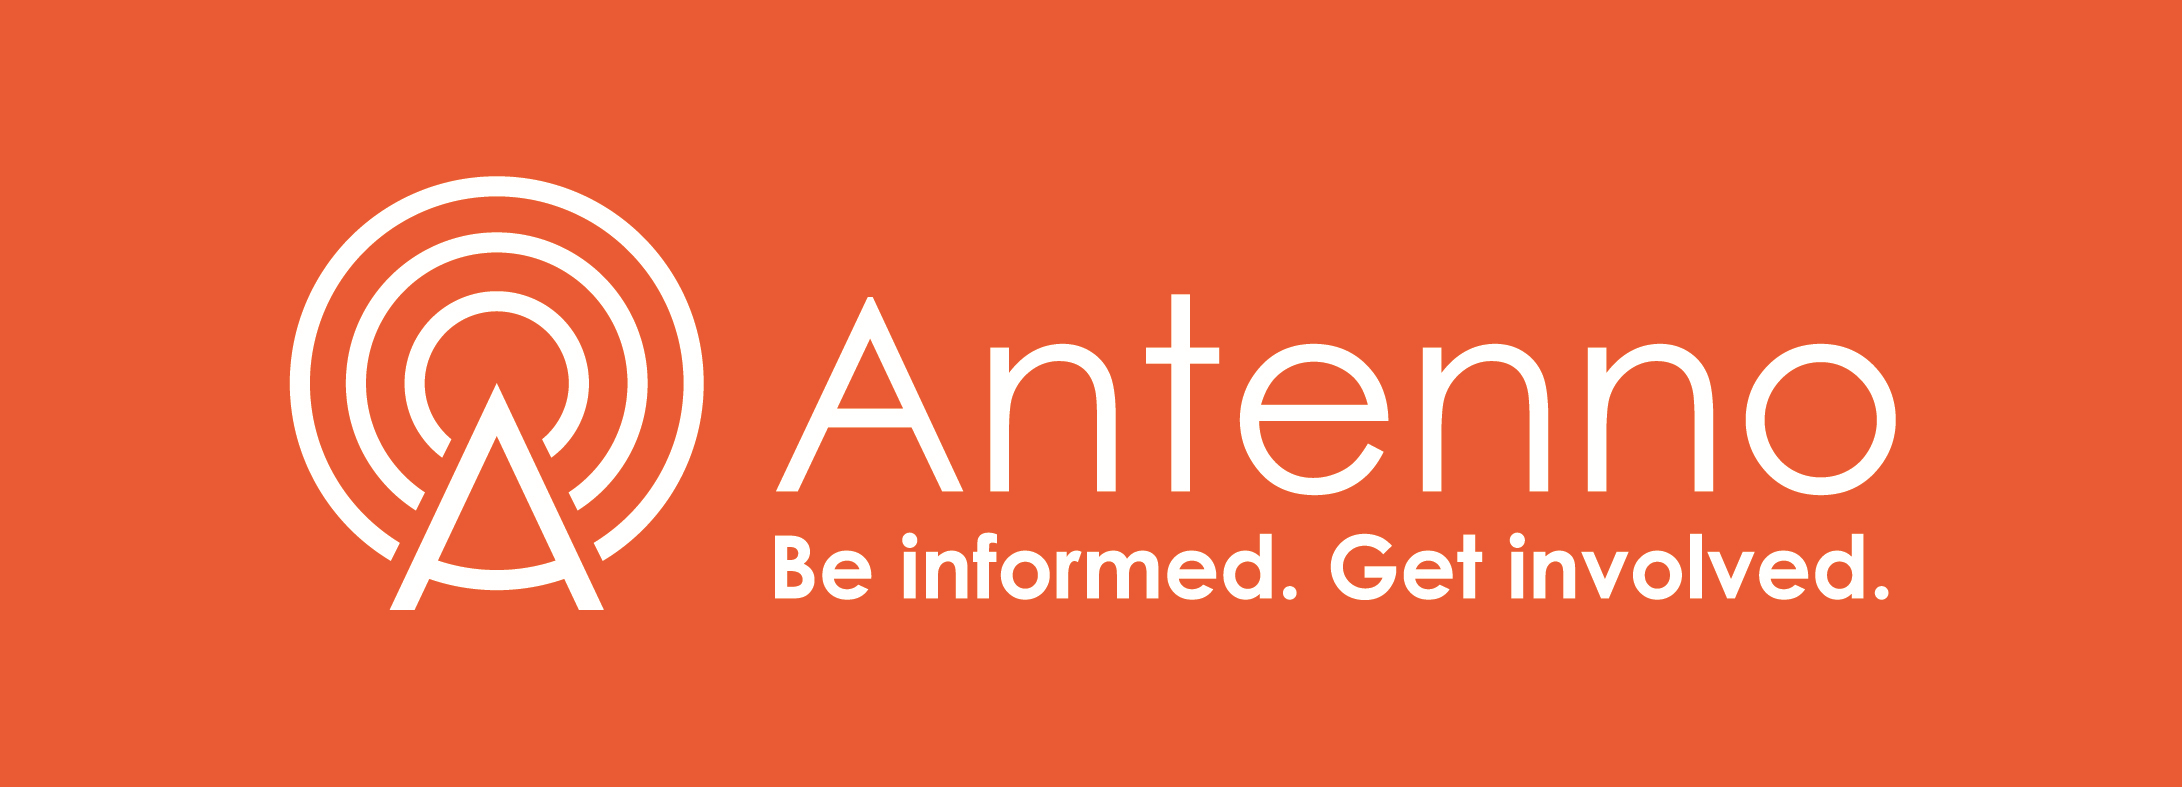 Banner Image: Antenno - Be informed. Get involved.